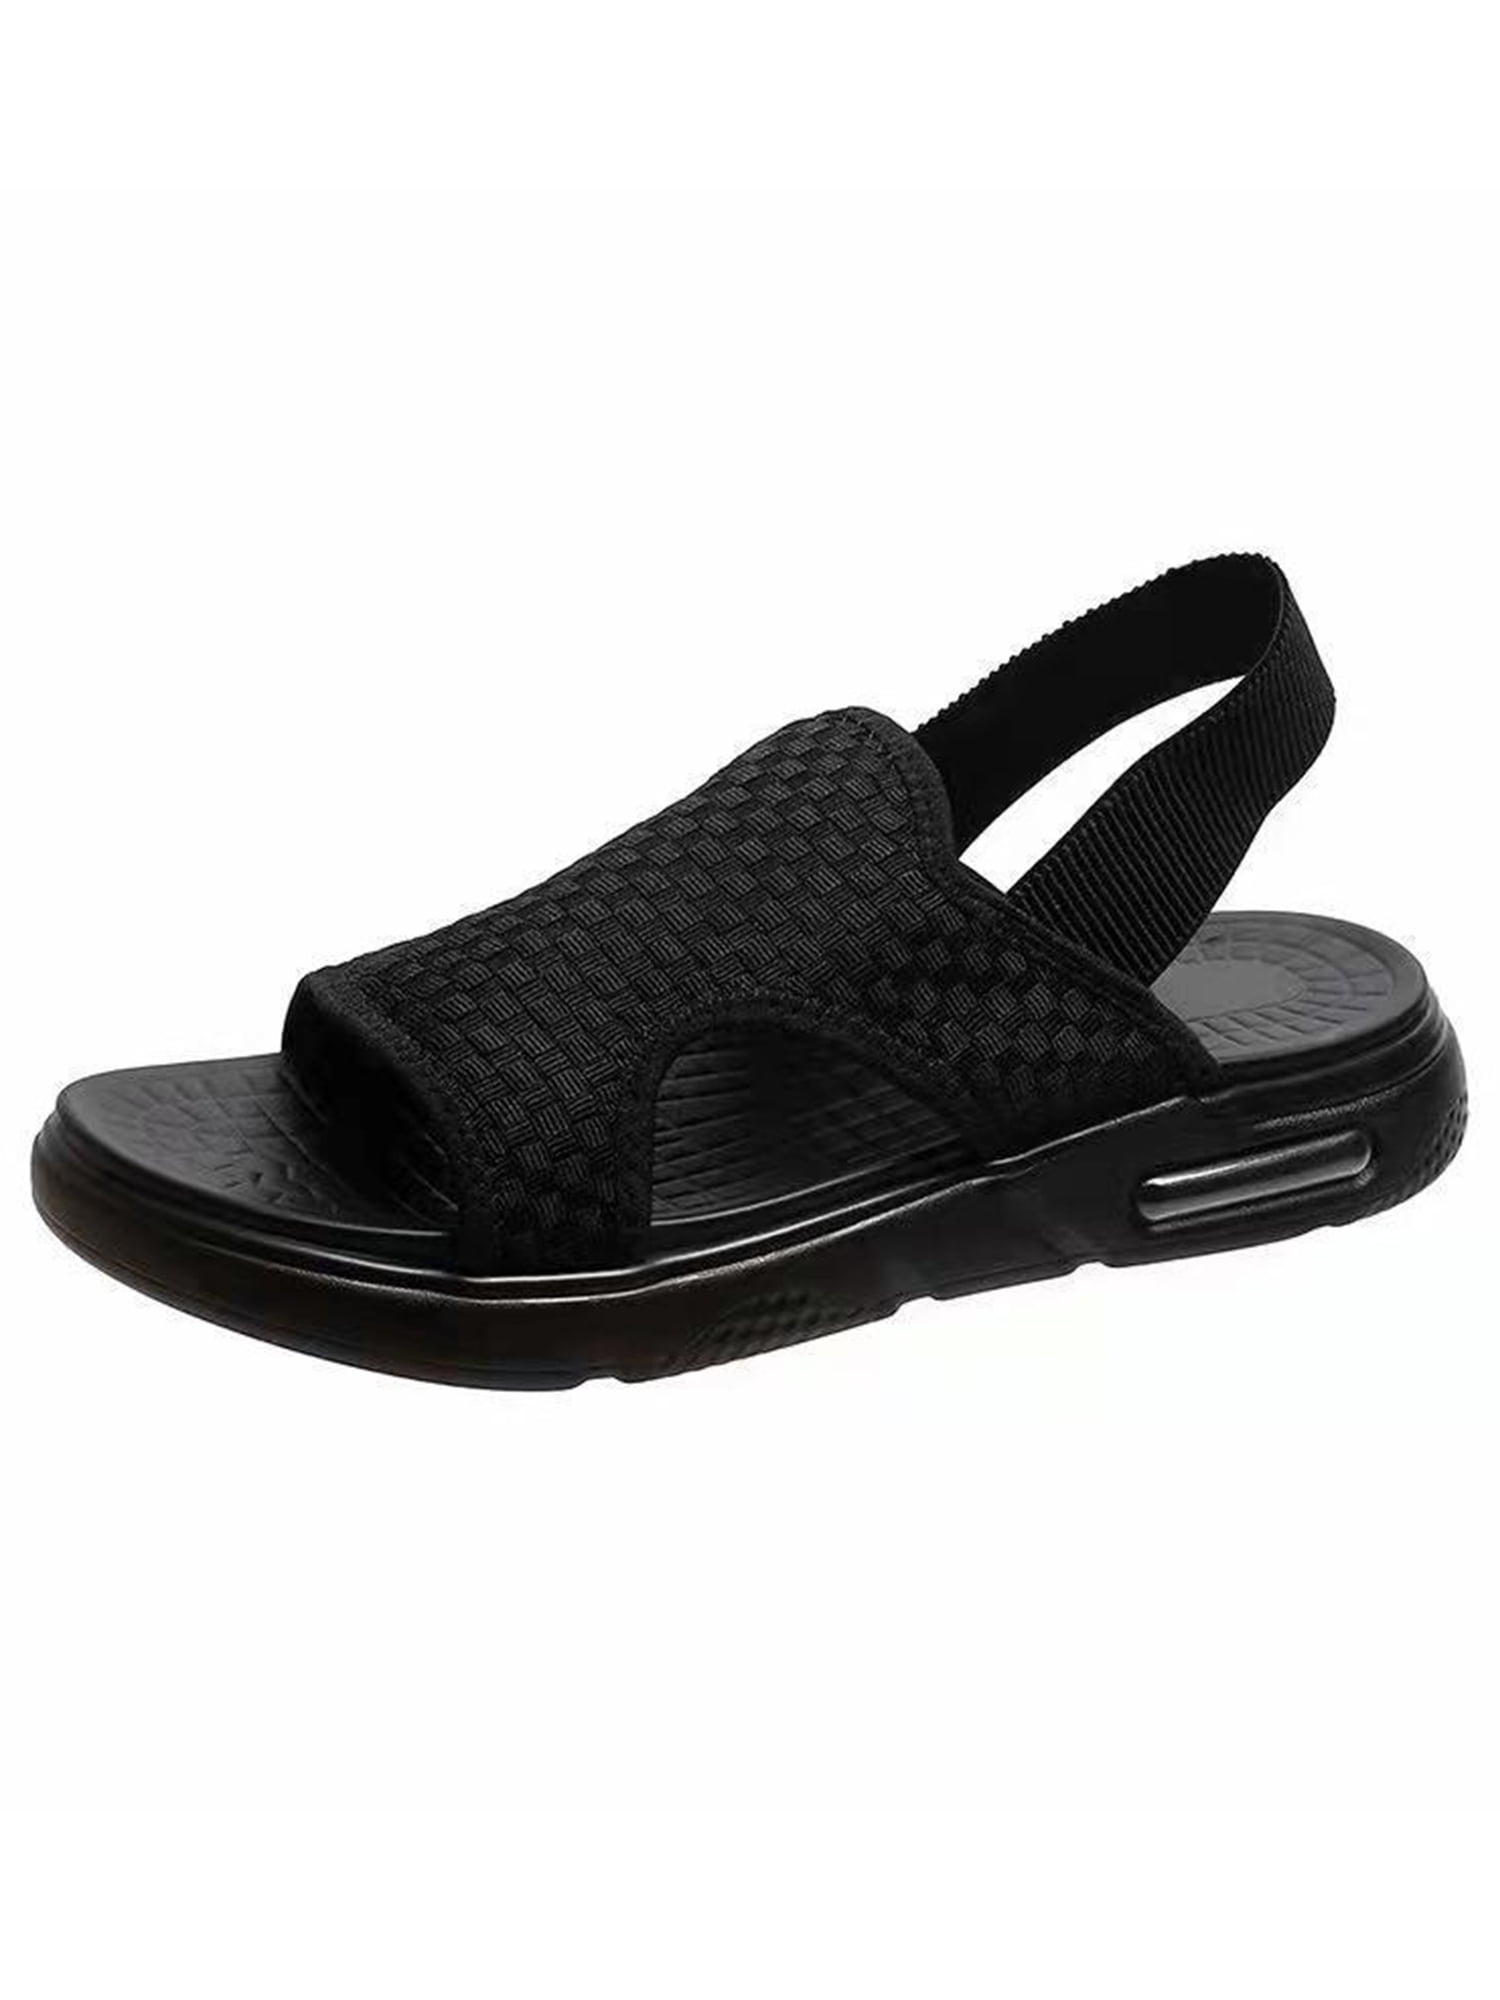 Buy Black Sandals for Men by PERFORMAX Online | Ajio.com